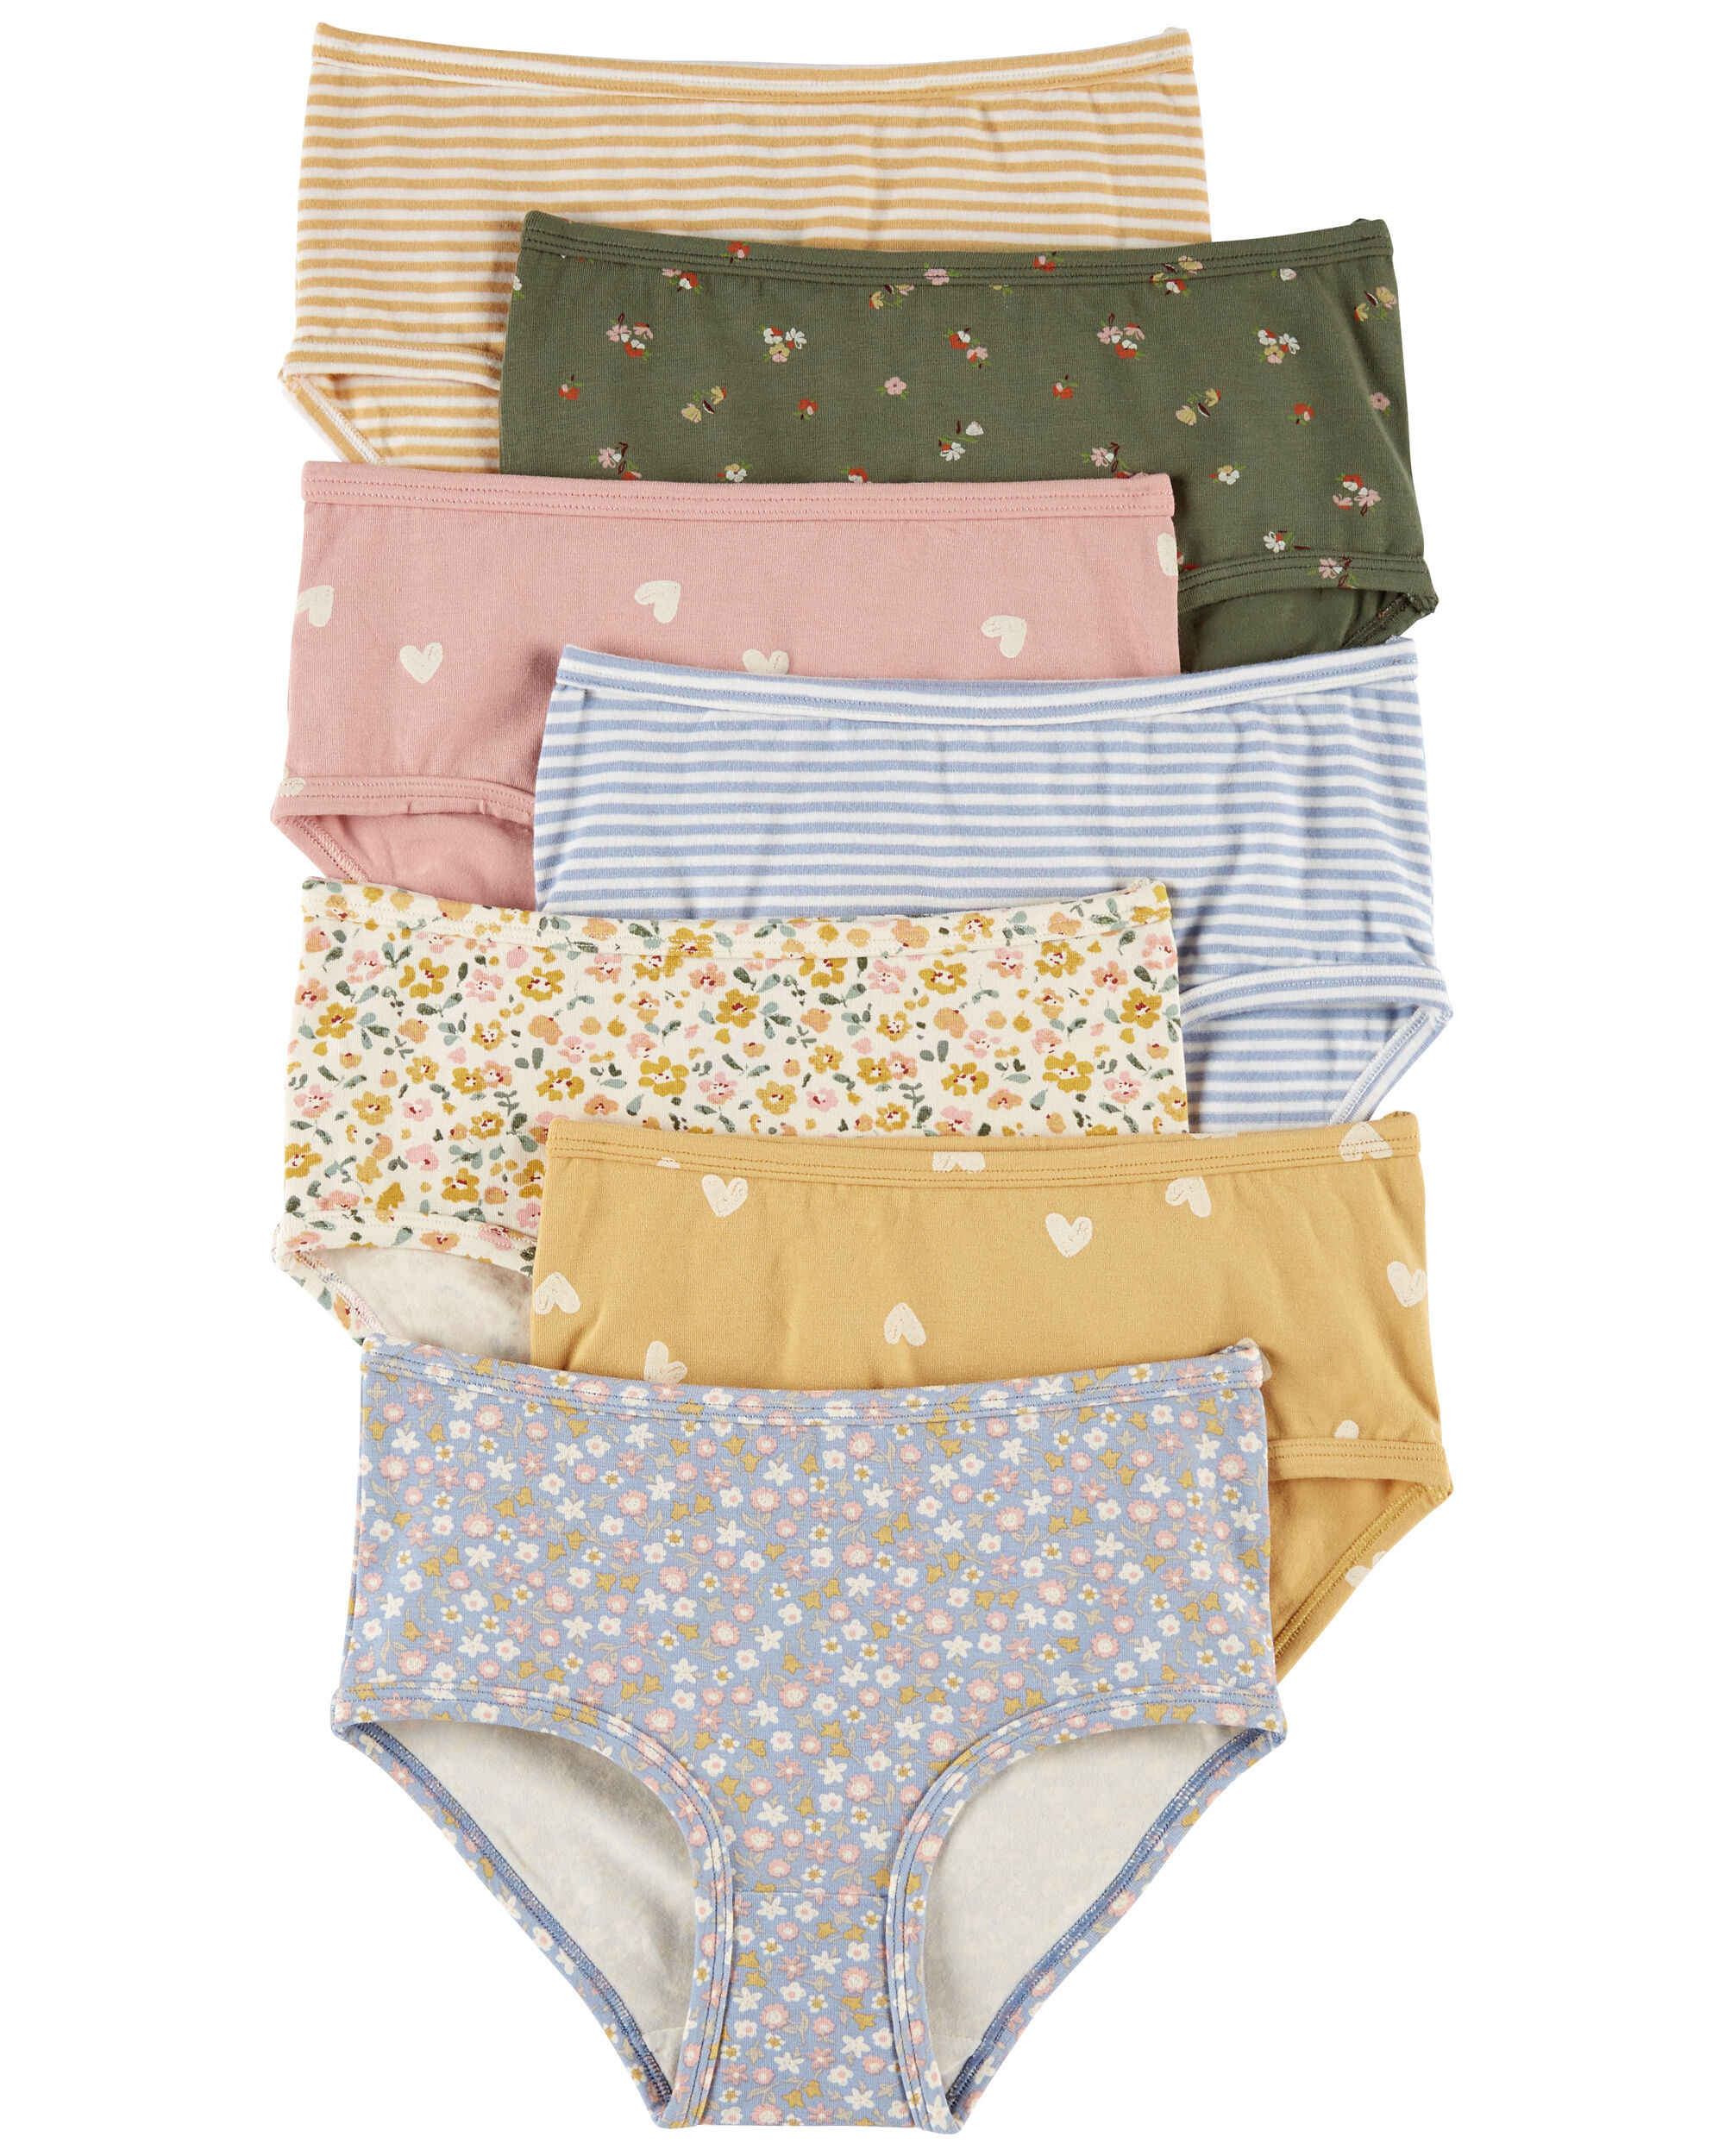  Carters/OshKosh Girls Little 7-Pack Underwear